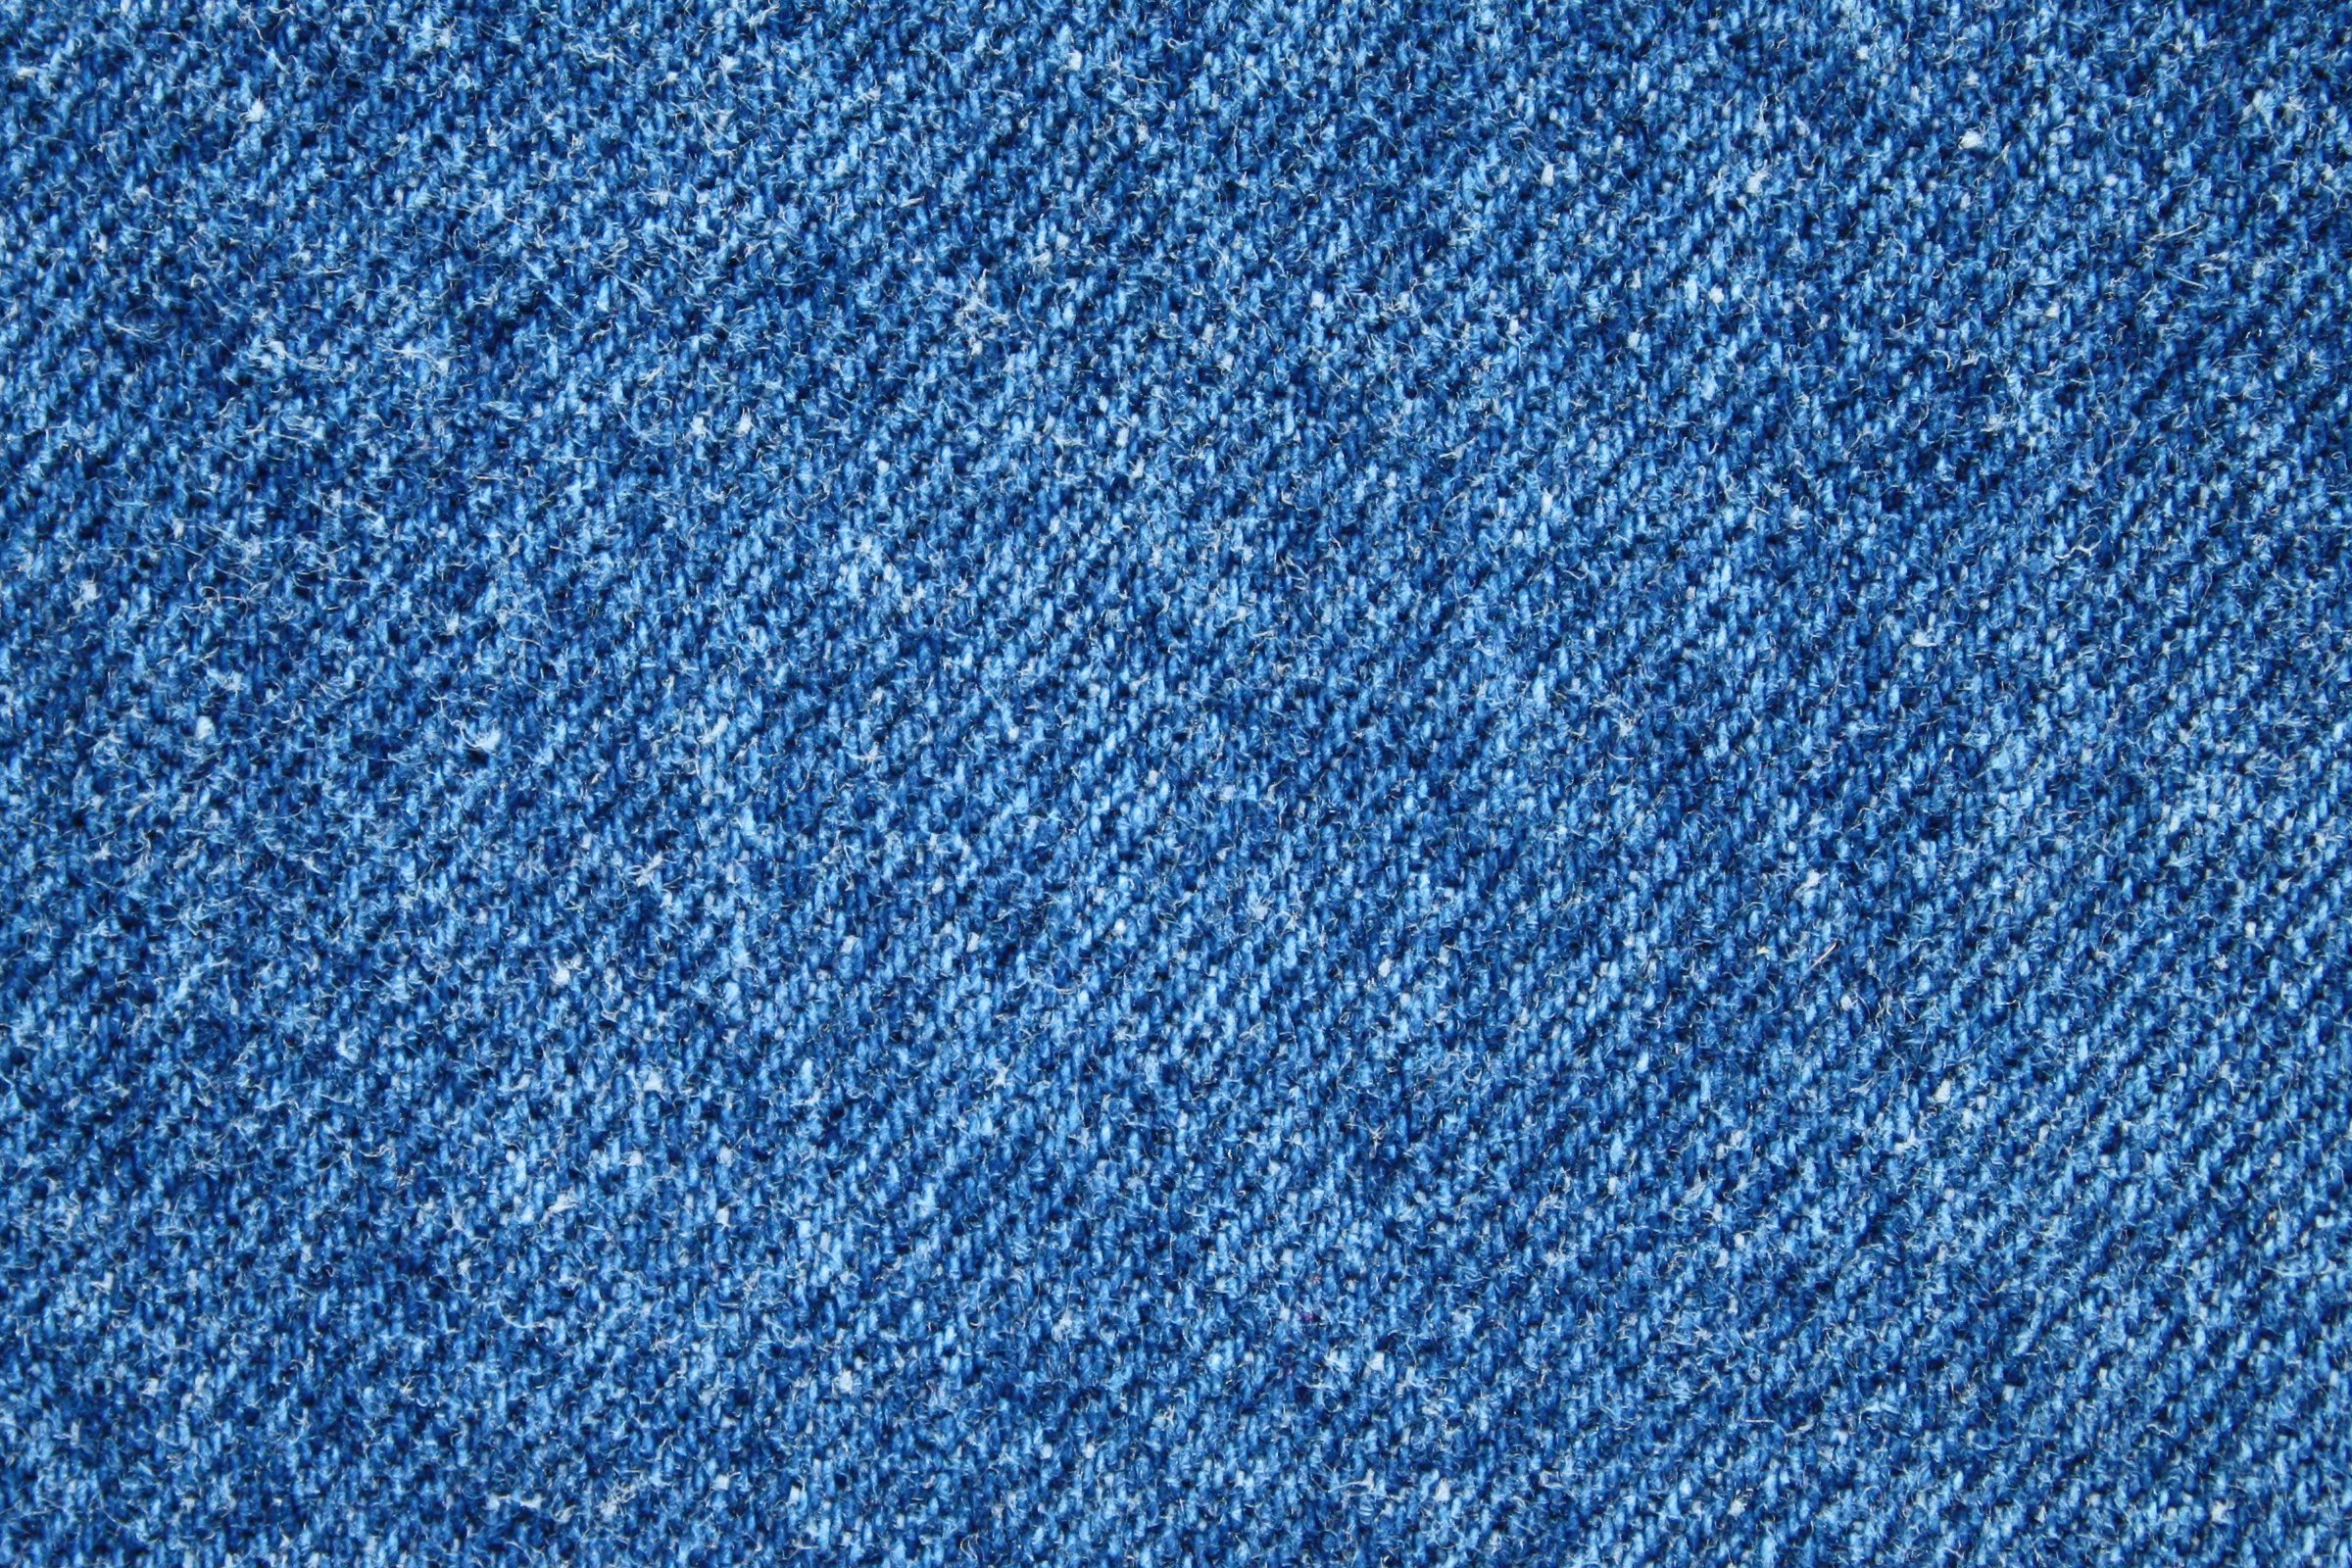 blue-denim-fabric-closeup-texture-picture-free-photograph-photos